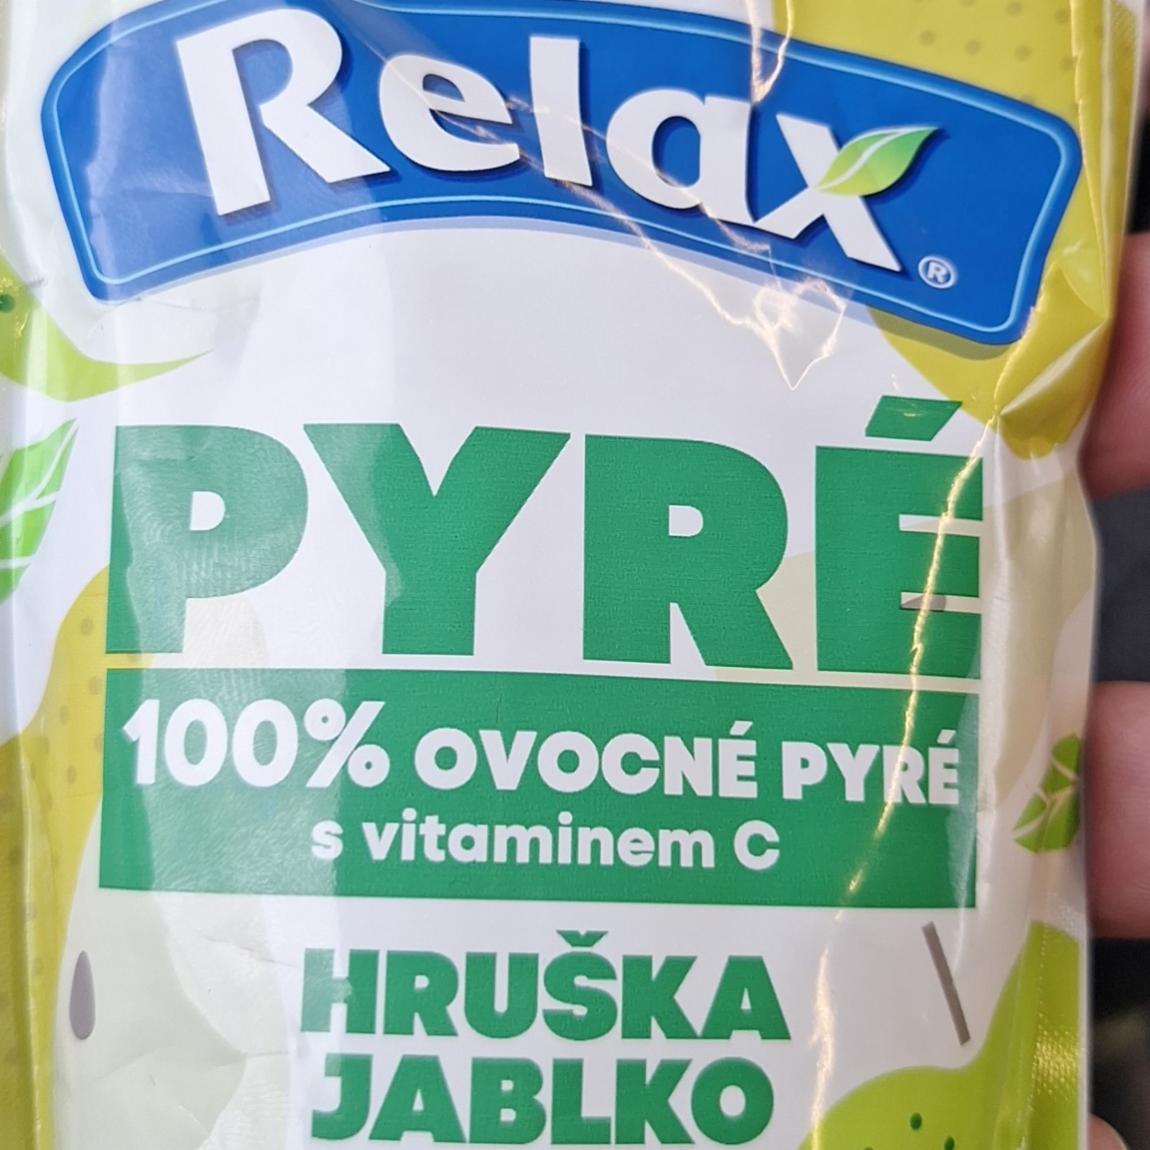 Képek - Pyré 100% ovocné pyré s vitamínem C Hruška jablko Relax